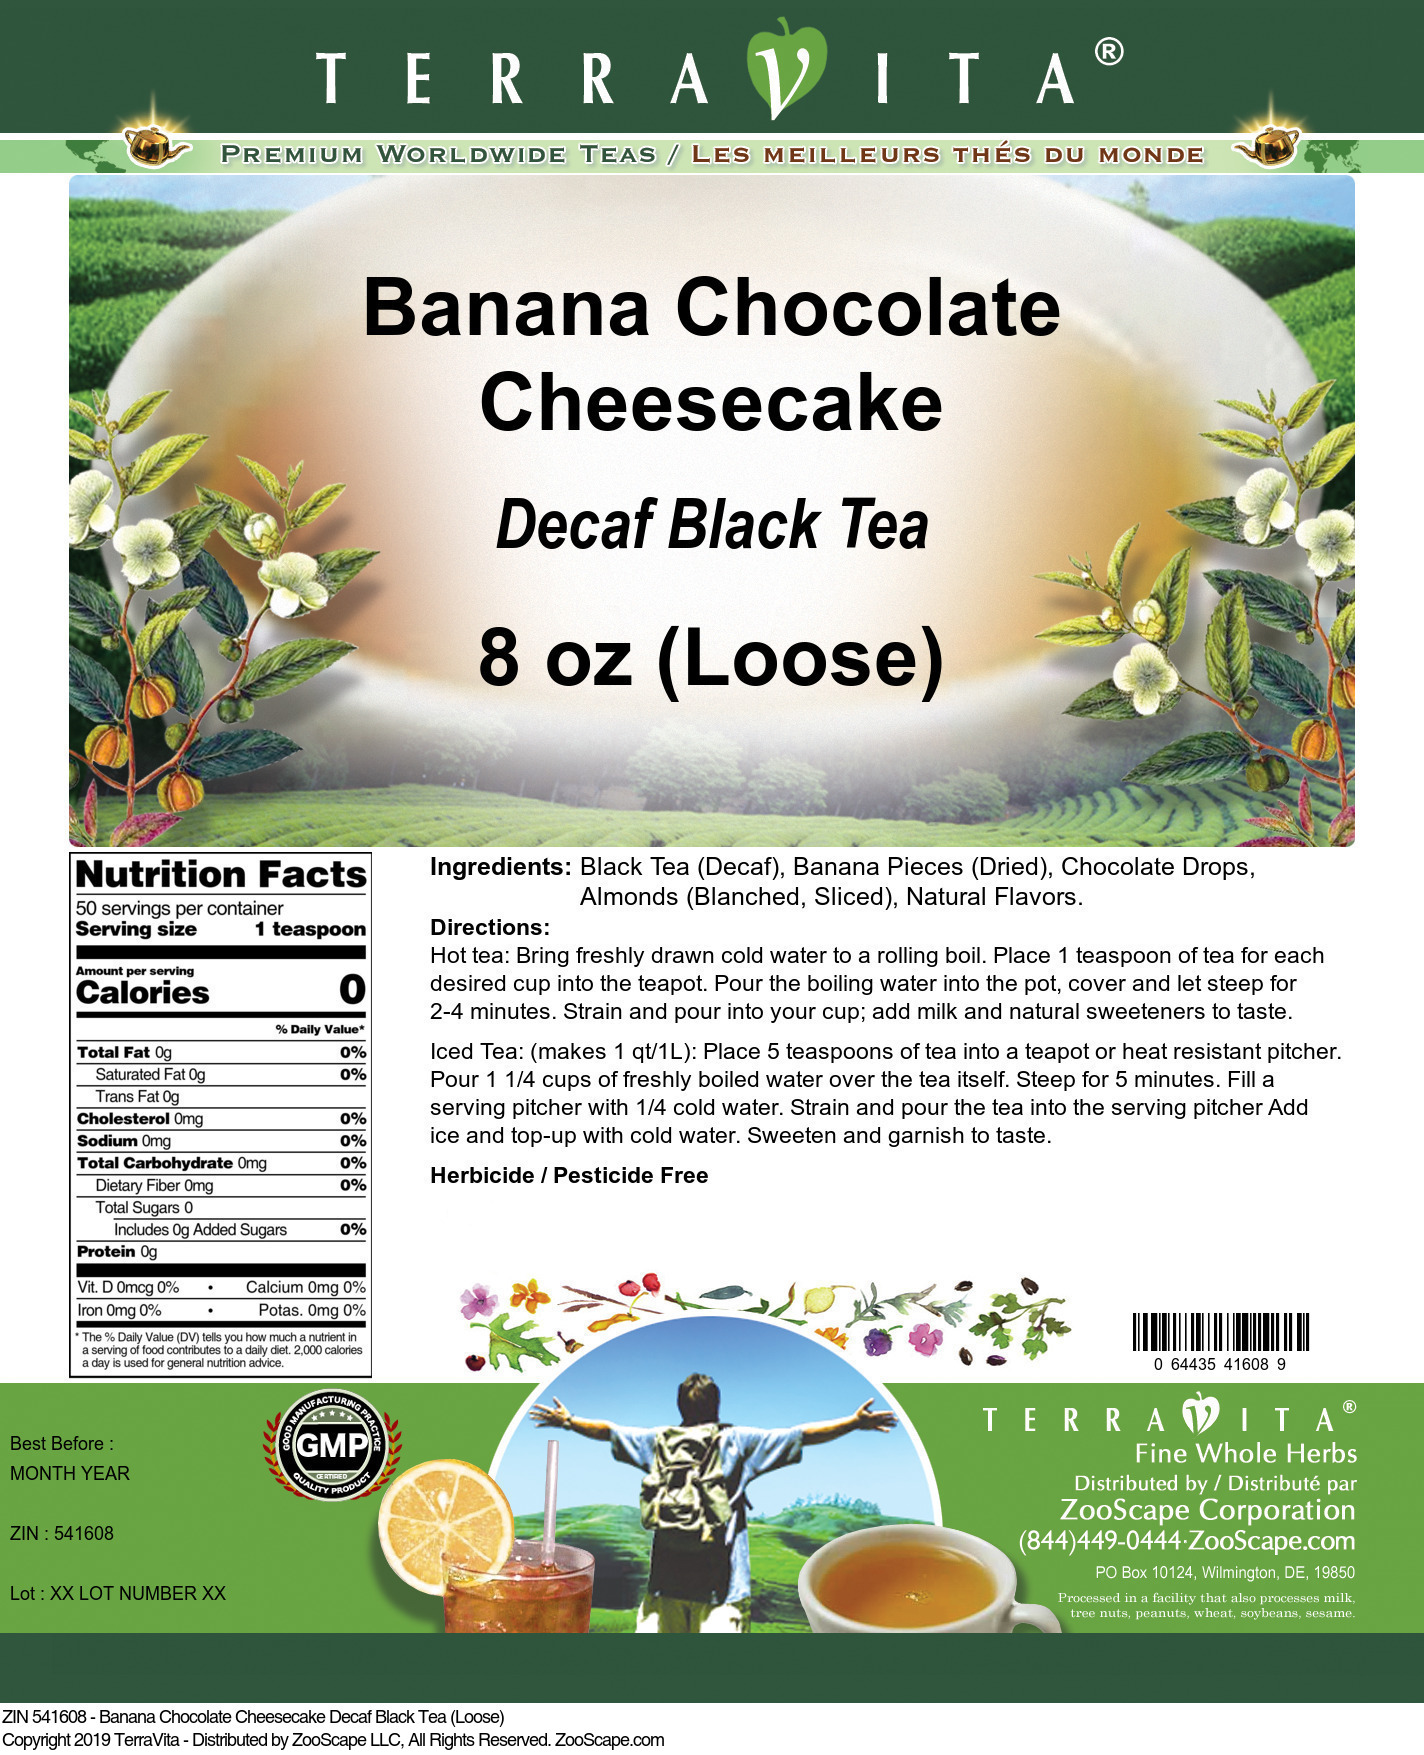 Banana Chocolate Cheesecake Decaf Black Tea (Loose) - Label